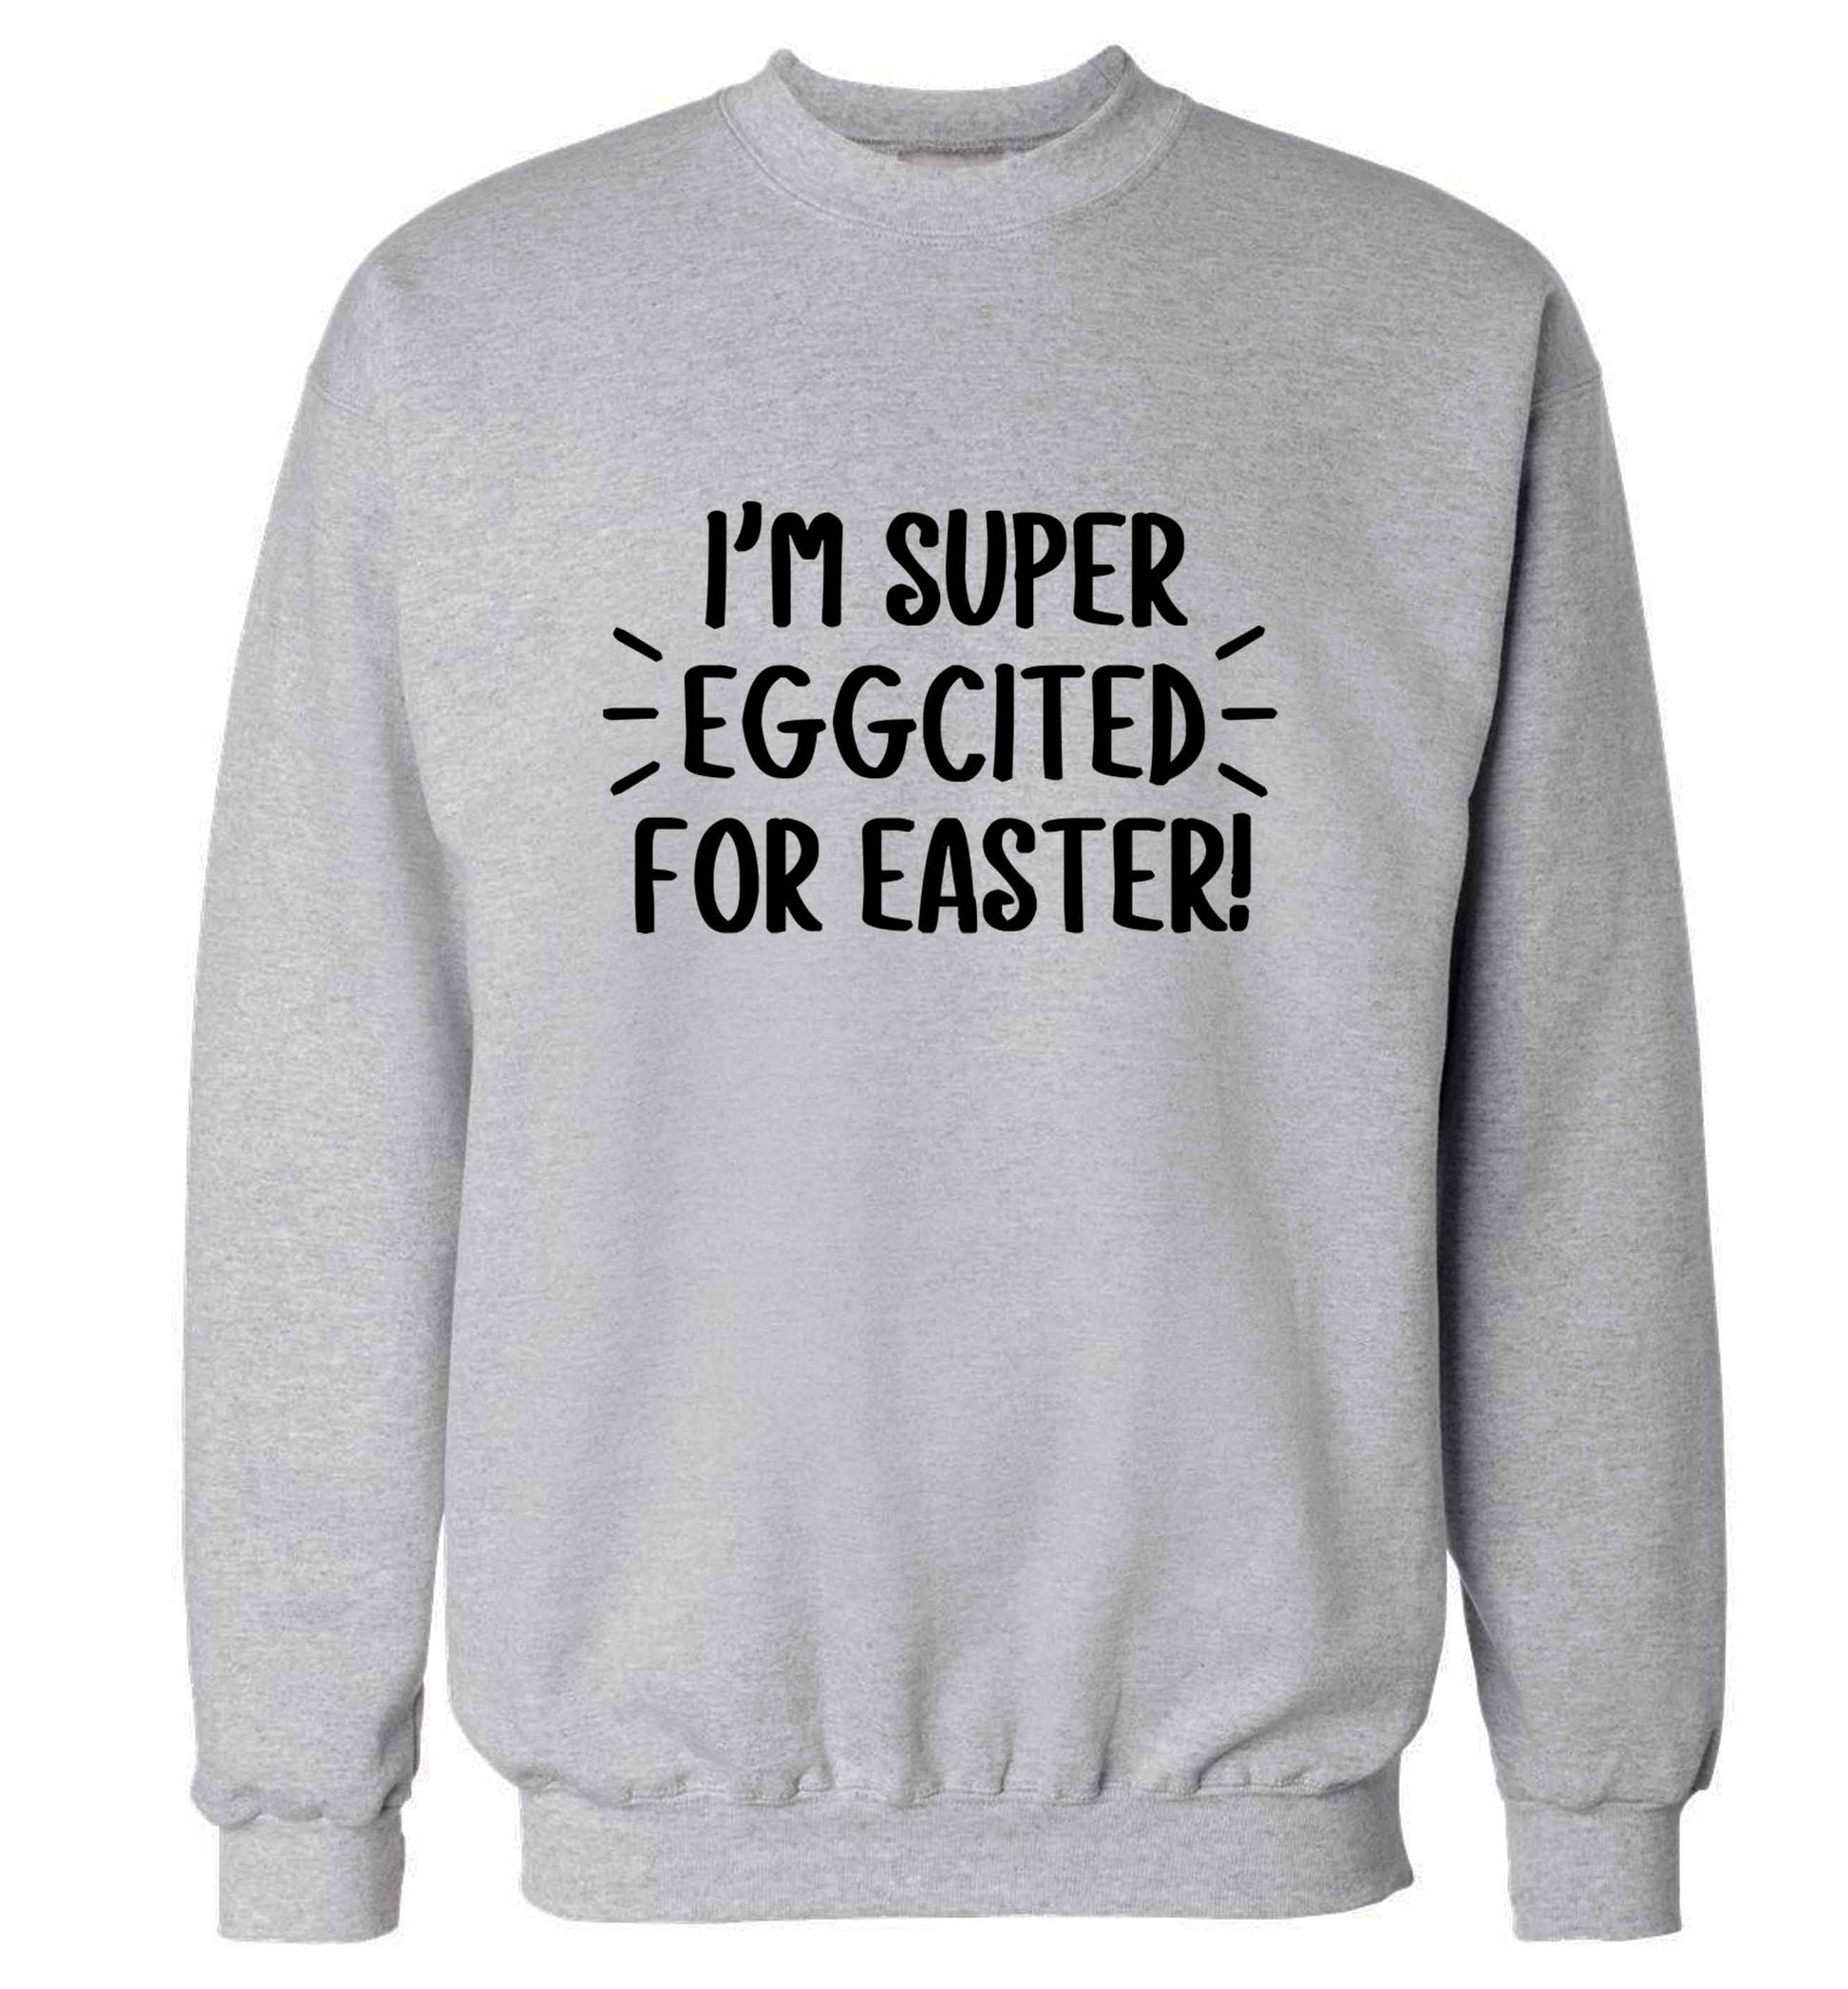 I'm super eggcited for Easter adult's unisex grey sweater 2XL